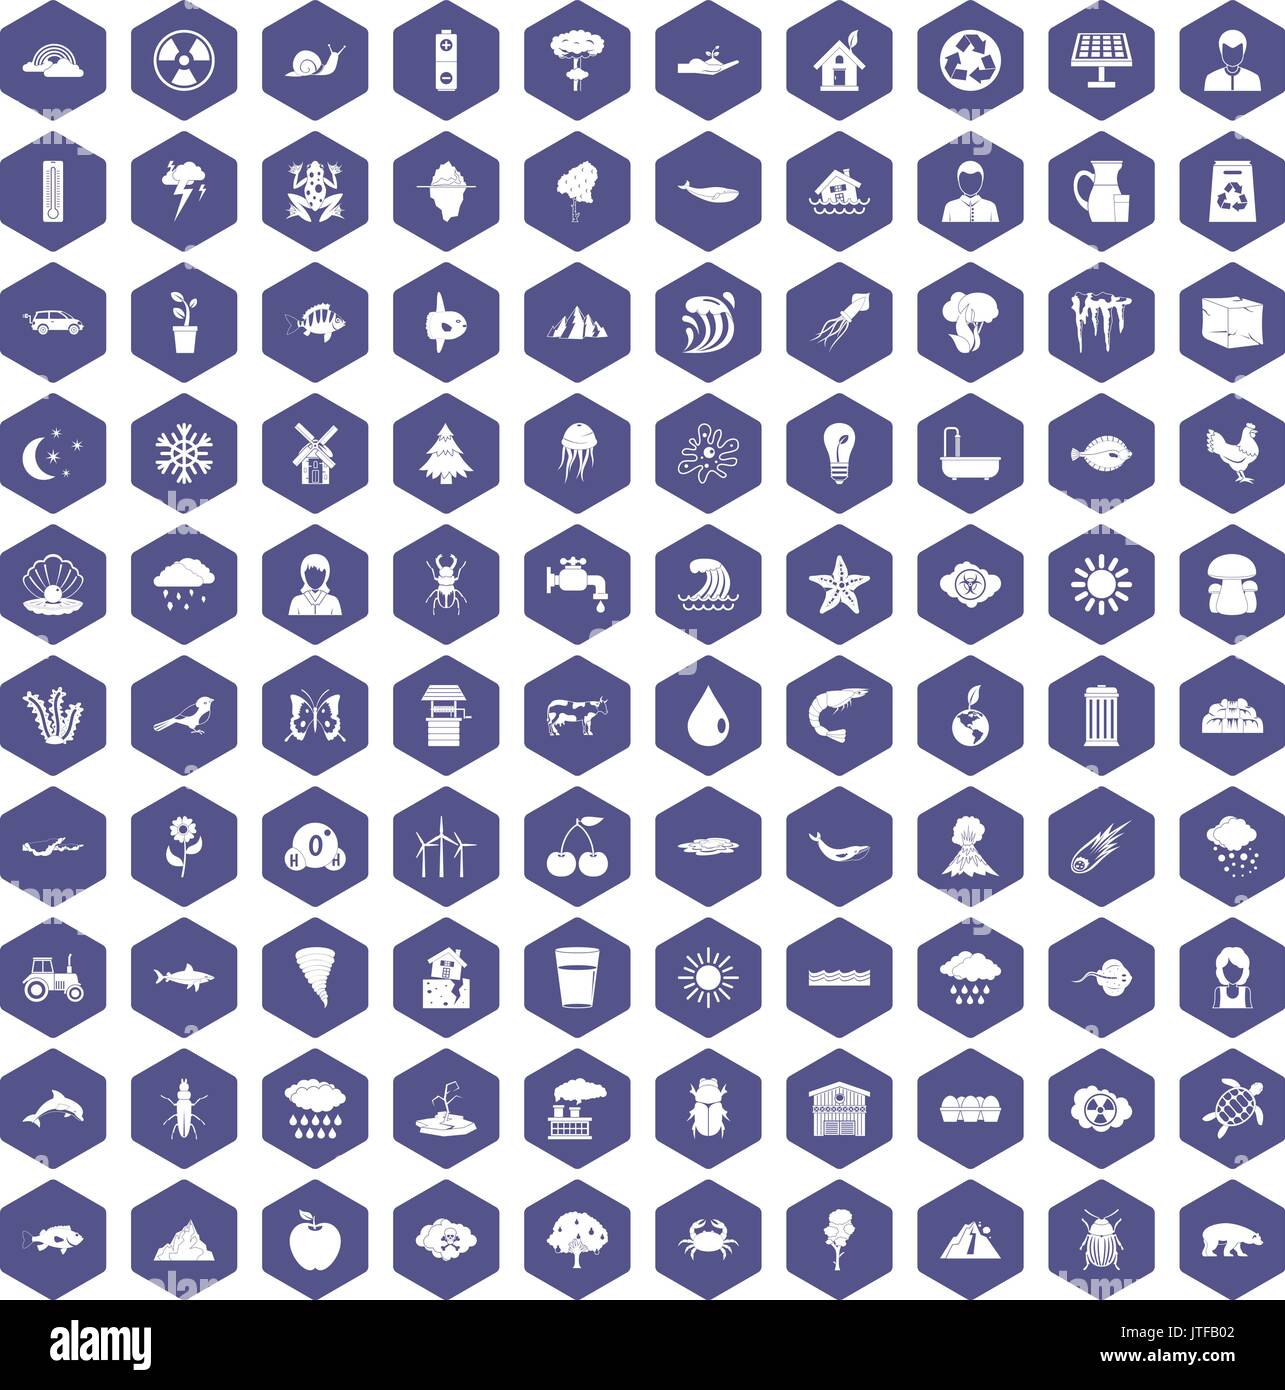 100 earth icons hexagon purple Stock Vector